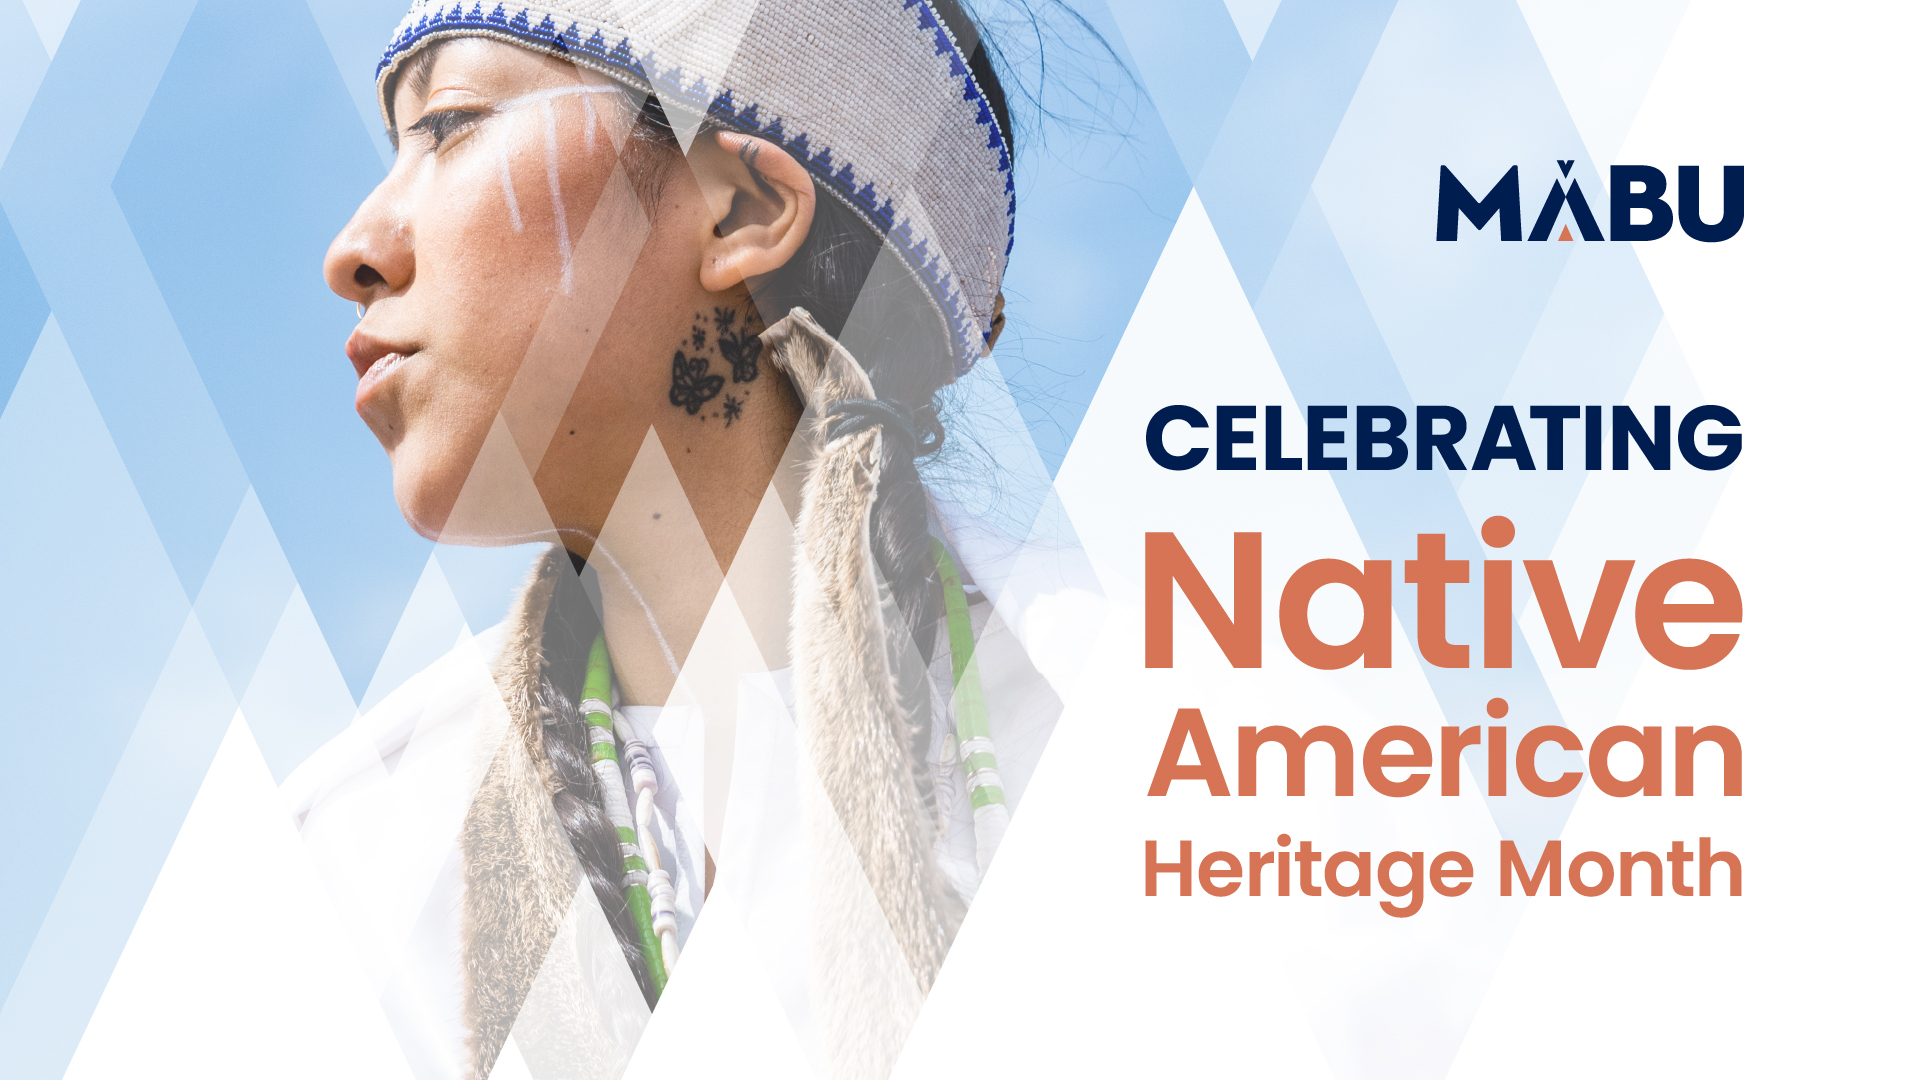 MABU Celebrating Native American Heritage Month